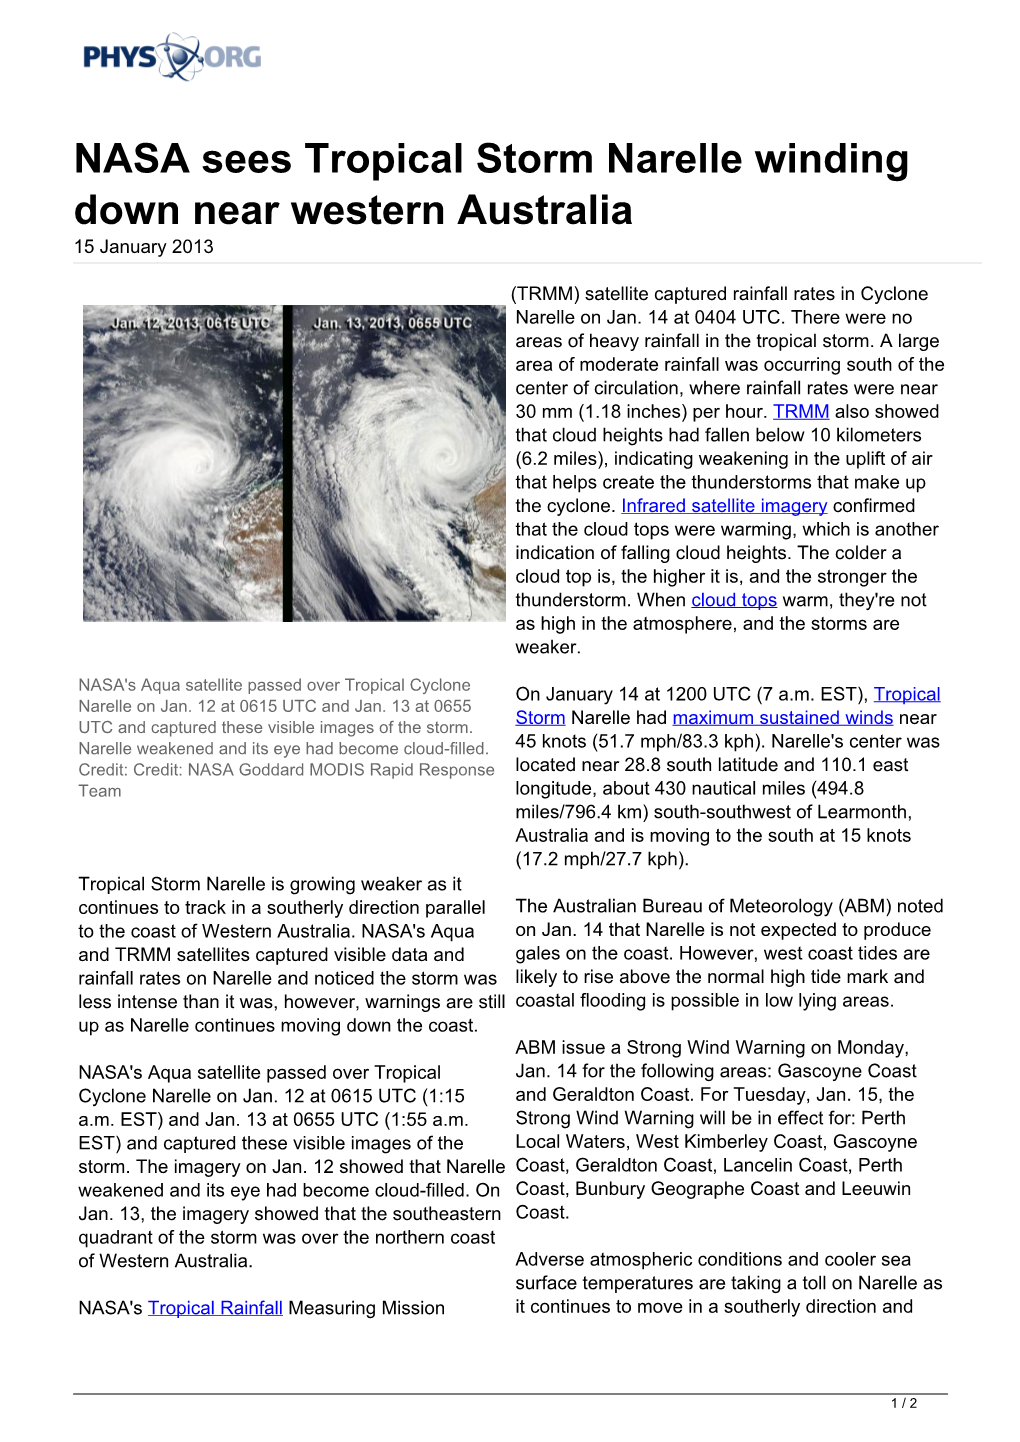 NASA Sees Tropical Storm Narelle Winding Down Near Western Australia 15 January 2013